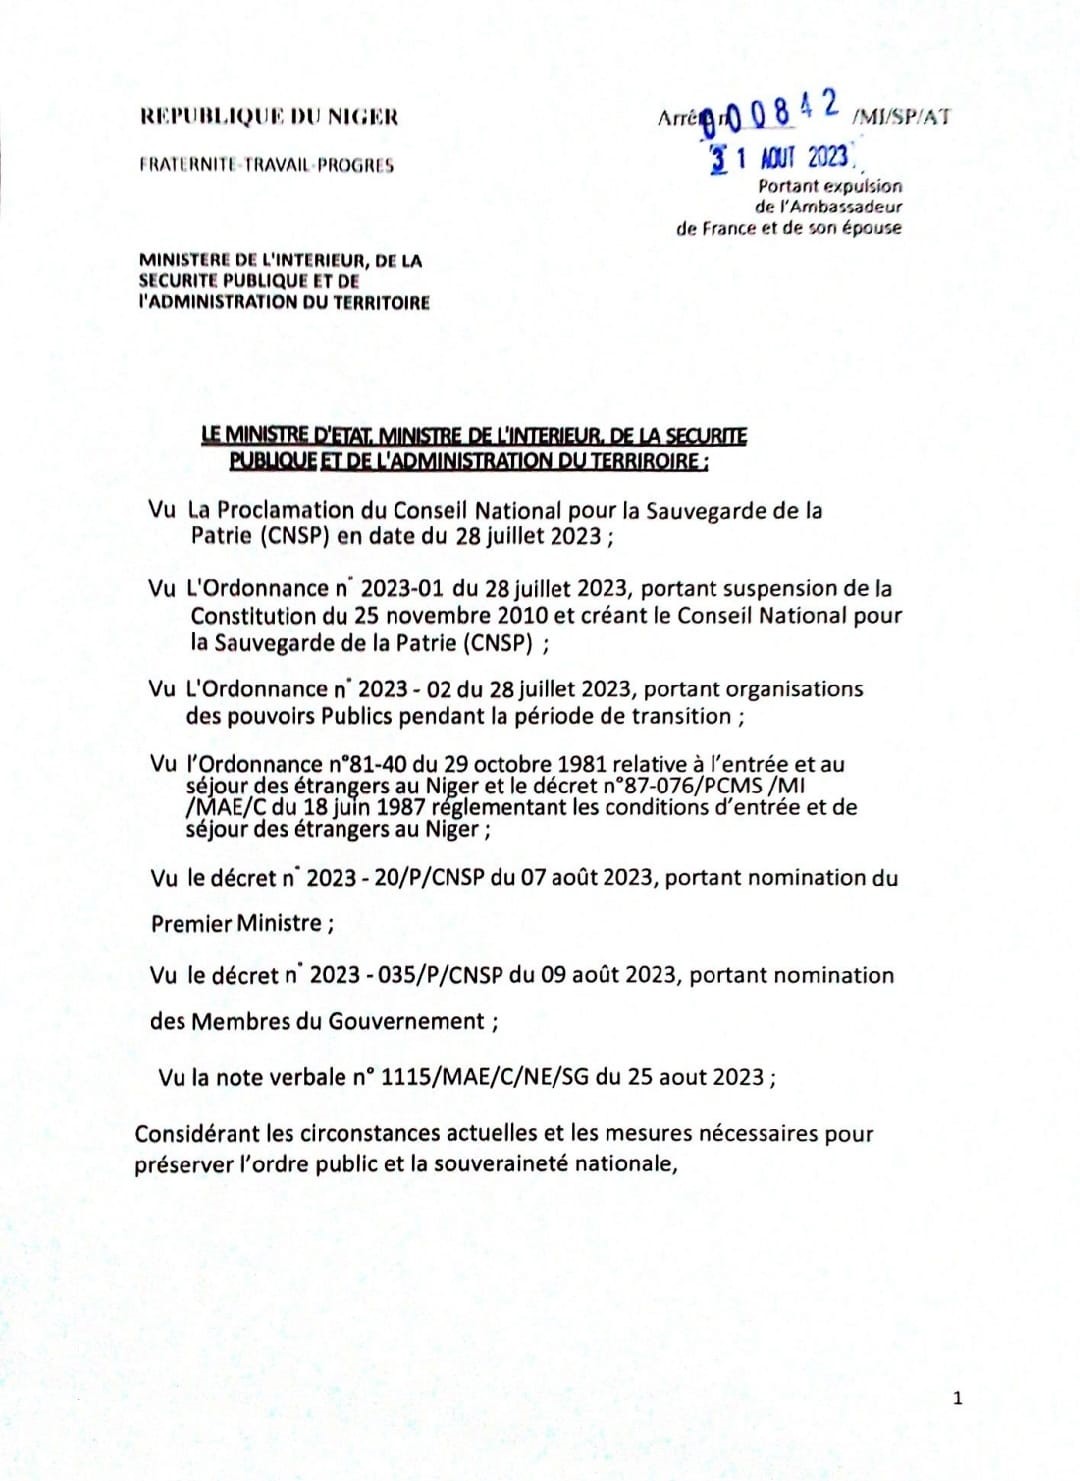 Niger : La junte signe un arrêté expulsant l’ambassadeur de France